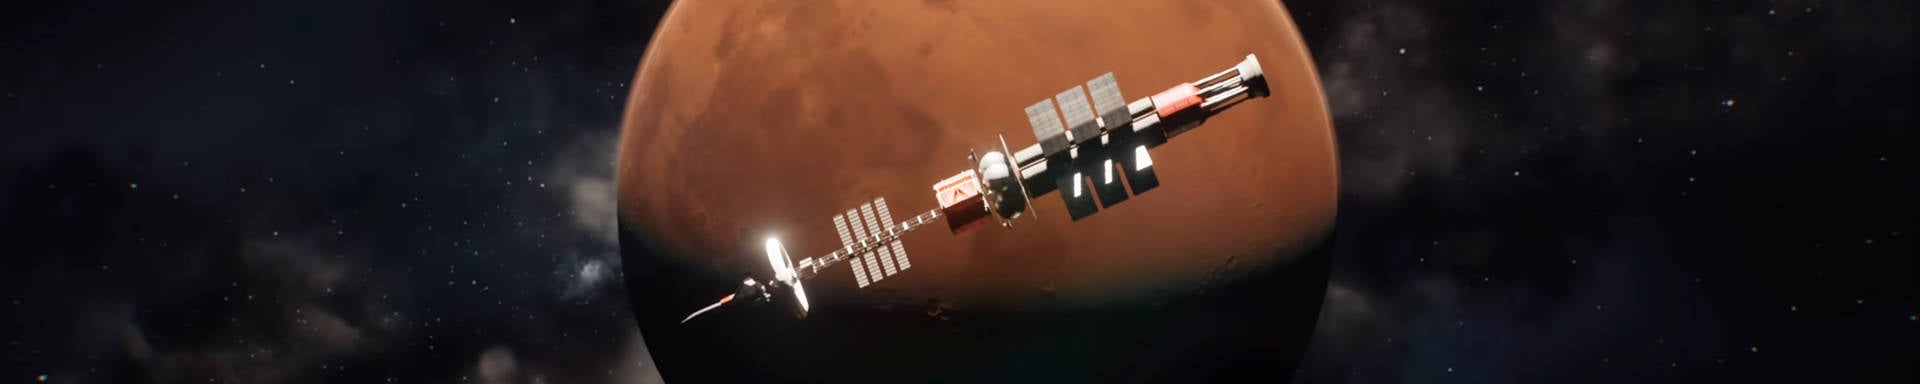 Kerbal Space Program 2 Release Date Delayed Early 2023 slice